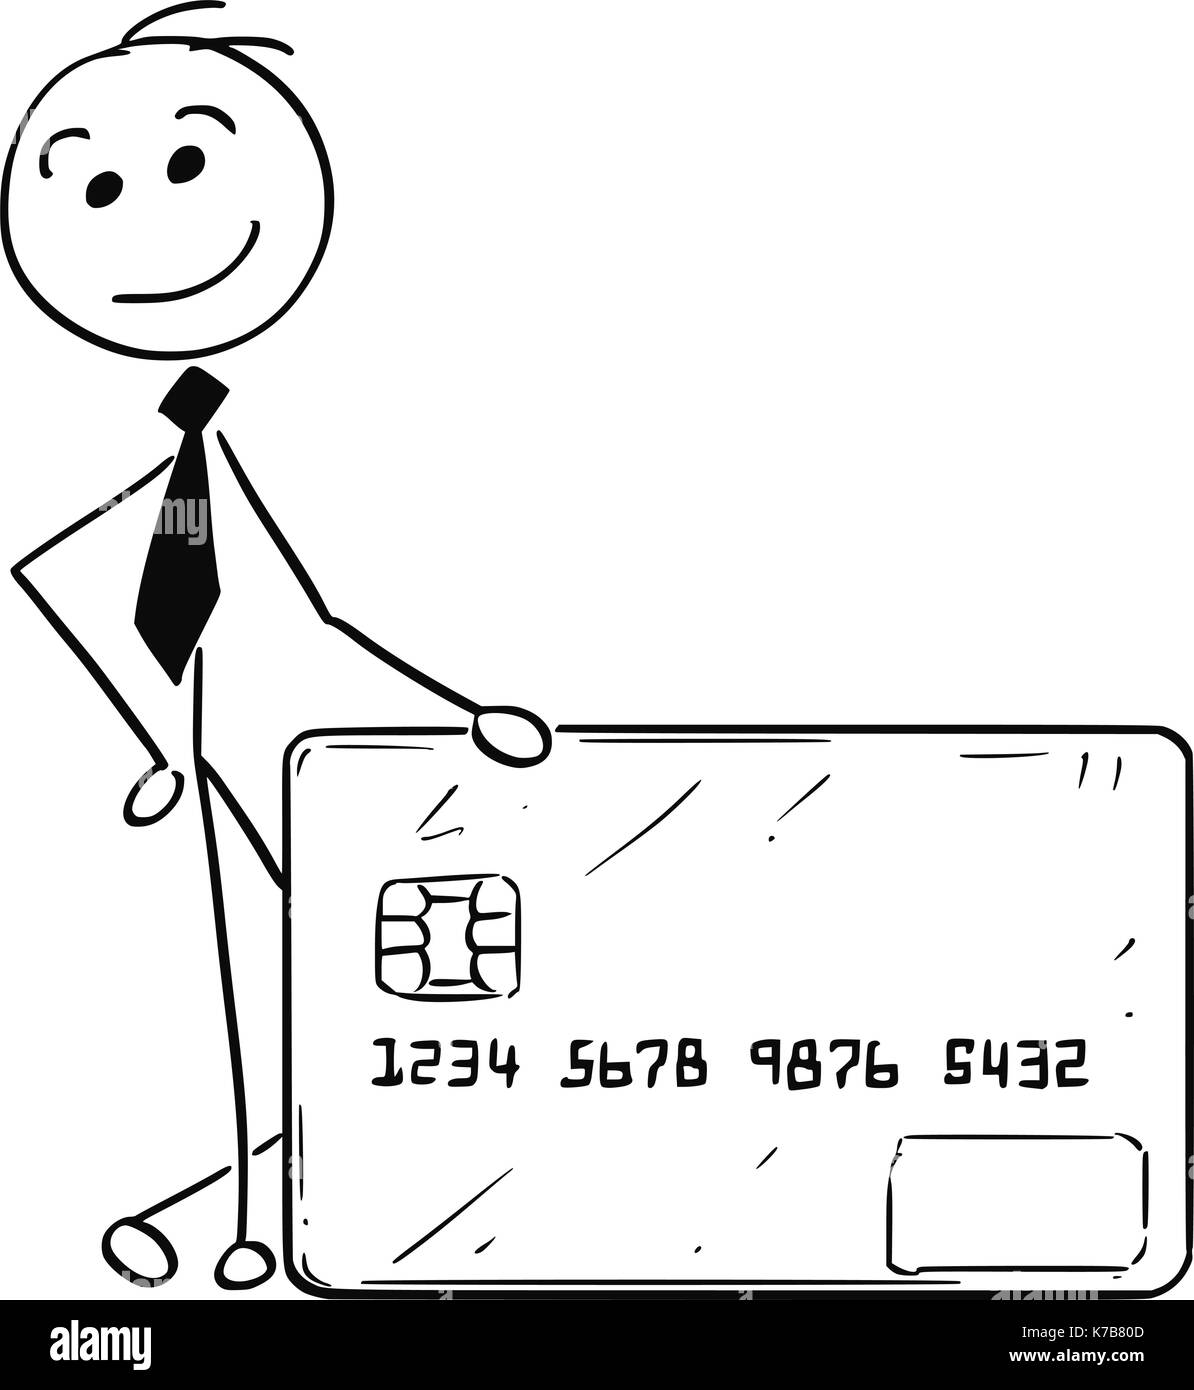 Cartoon stick man illustration of smiling business man businessman posing with credit or debit card. Stock Vector